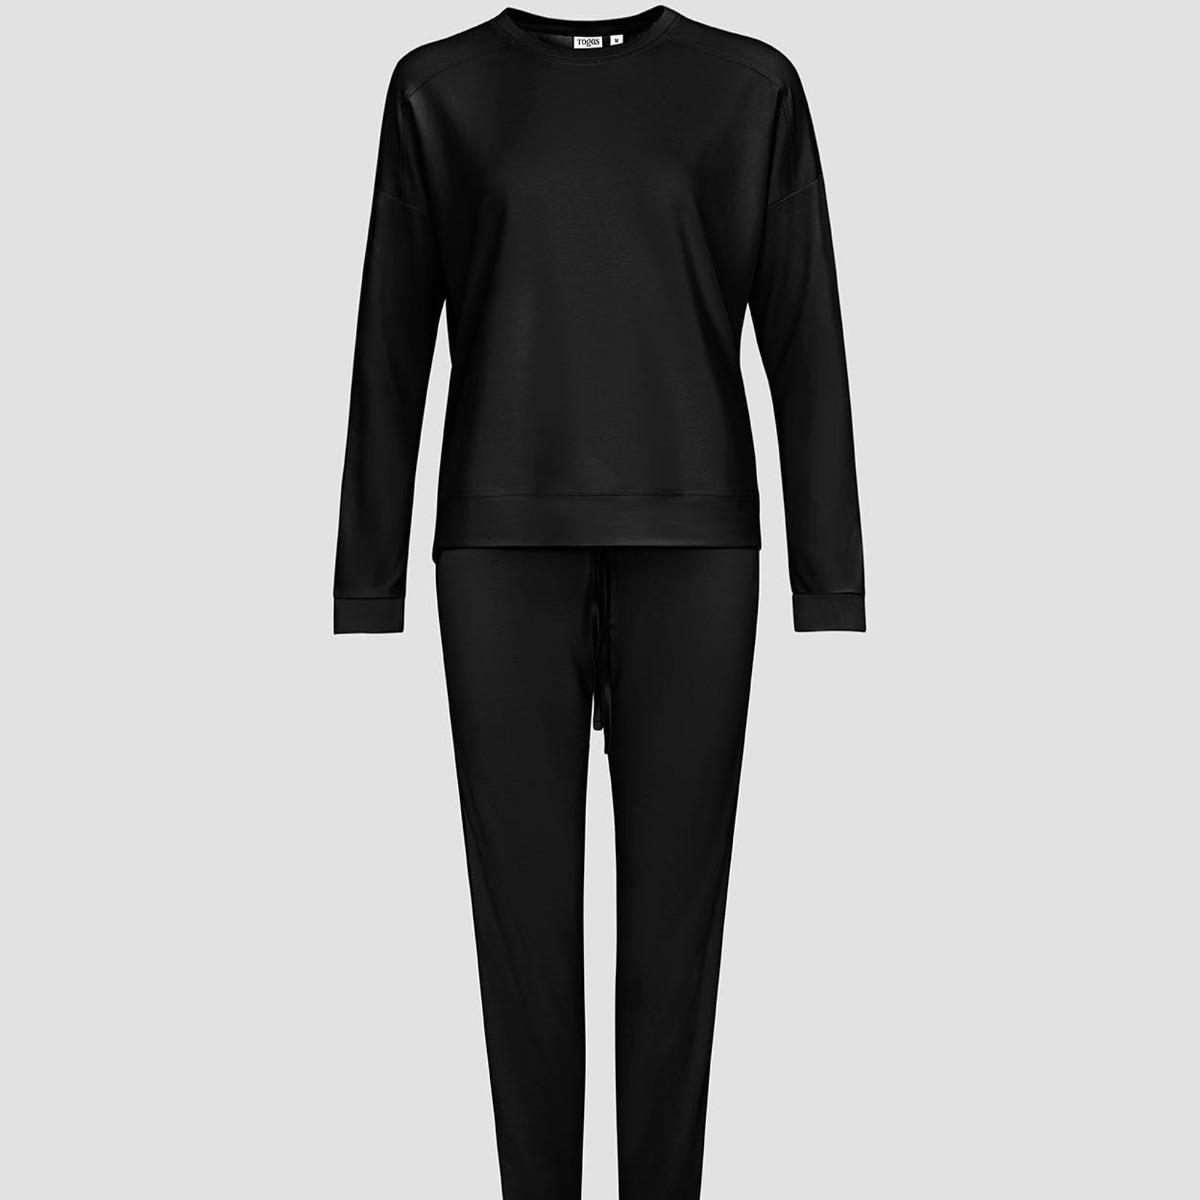 Женская пижама Togas Рене чёрная XS (42), цвет чёрный, размер 42